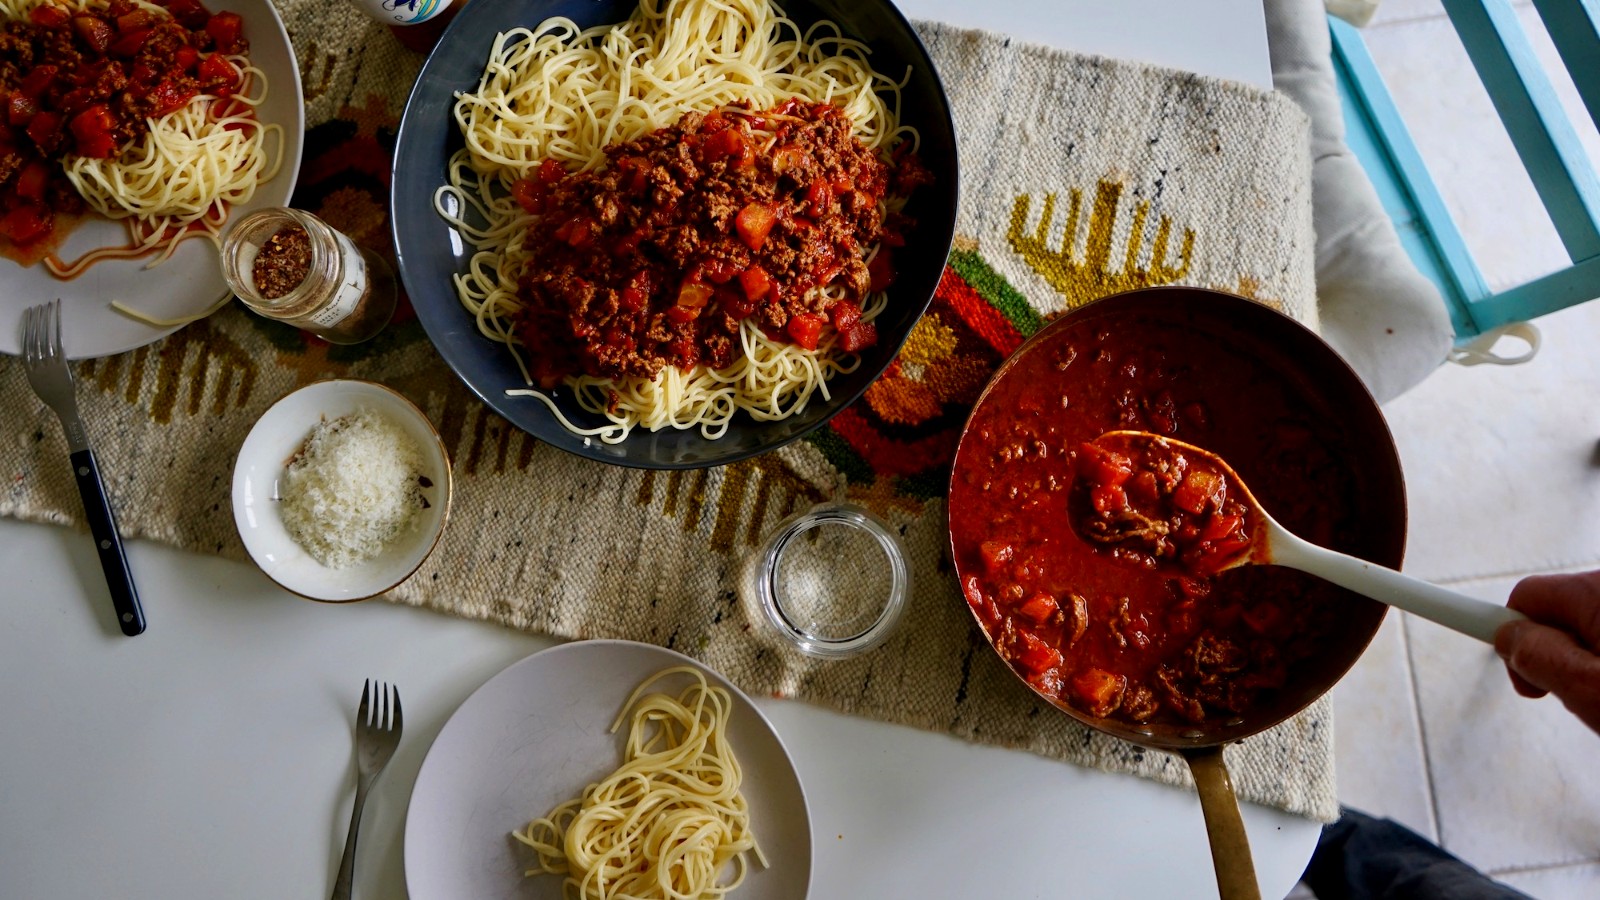 Image of Speedy Spaghetti